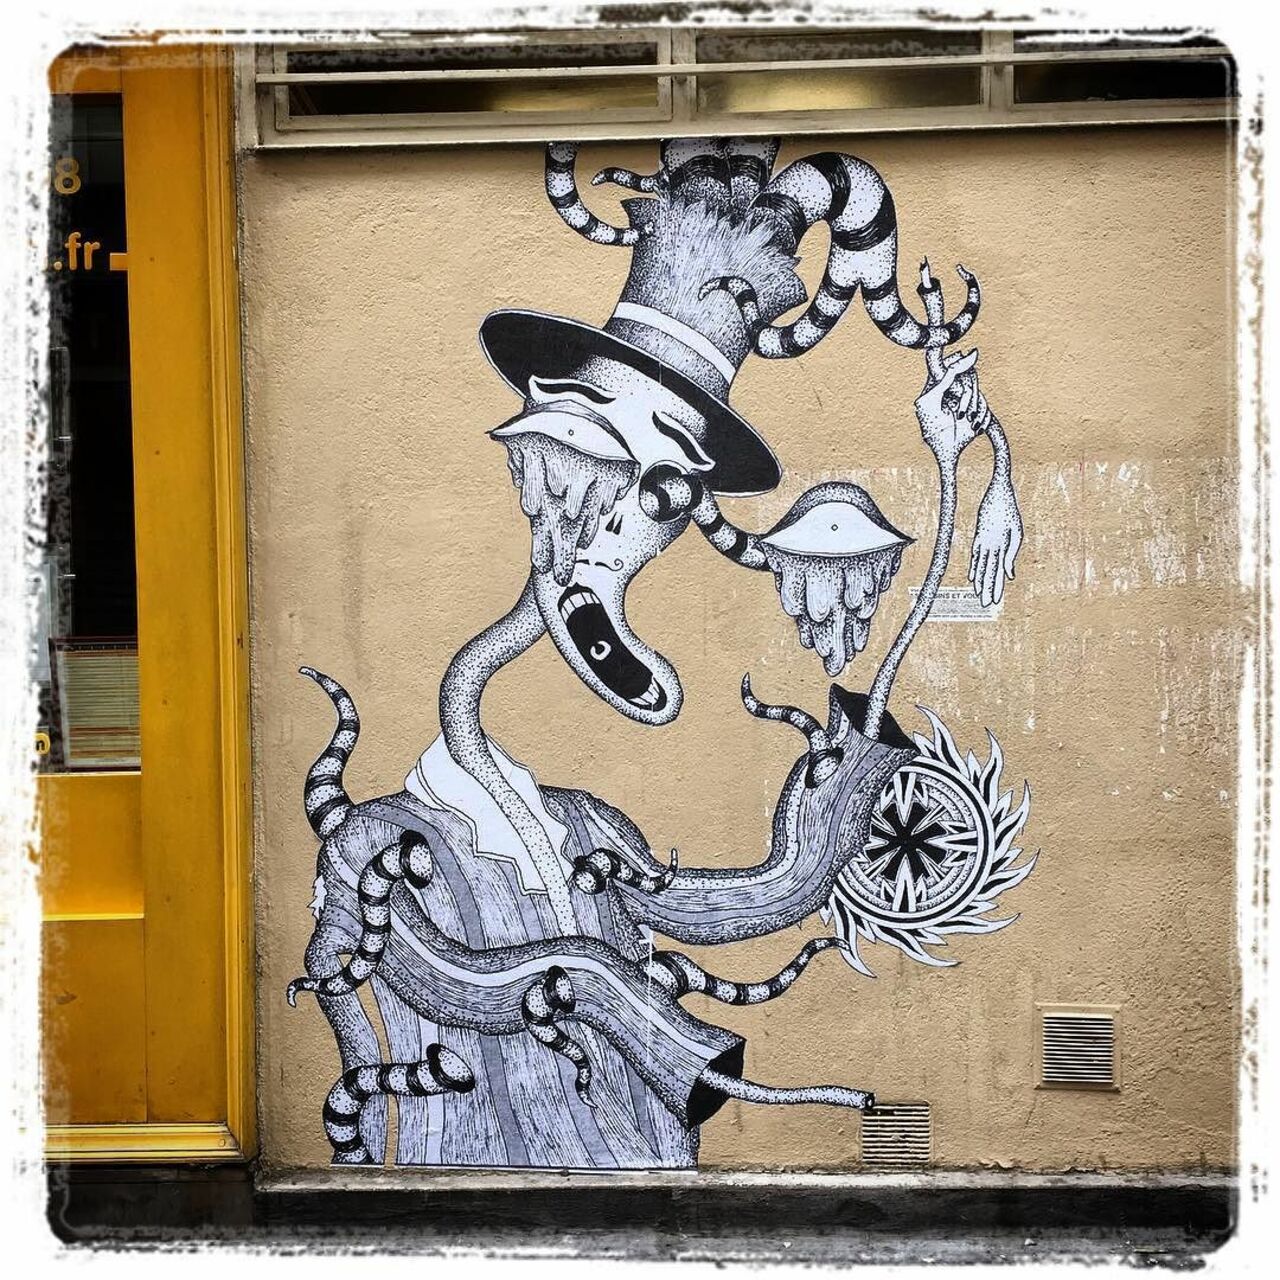 #Paris #graffiti photo by @gabyinparis http://ift.tt/1R5w9Pw #StreetArt https://t.co/oodARTpEsT